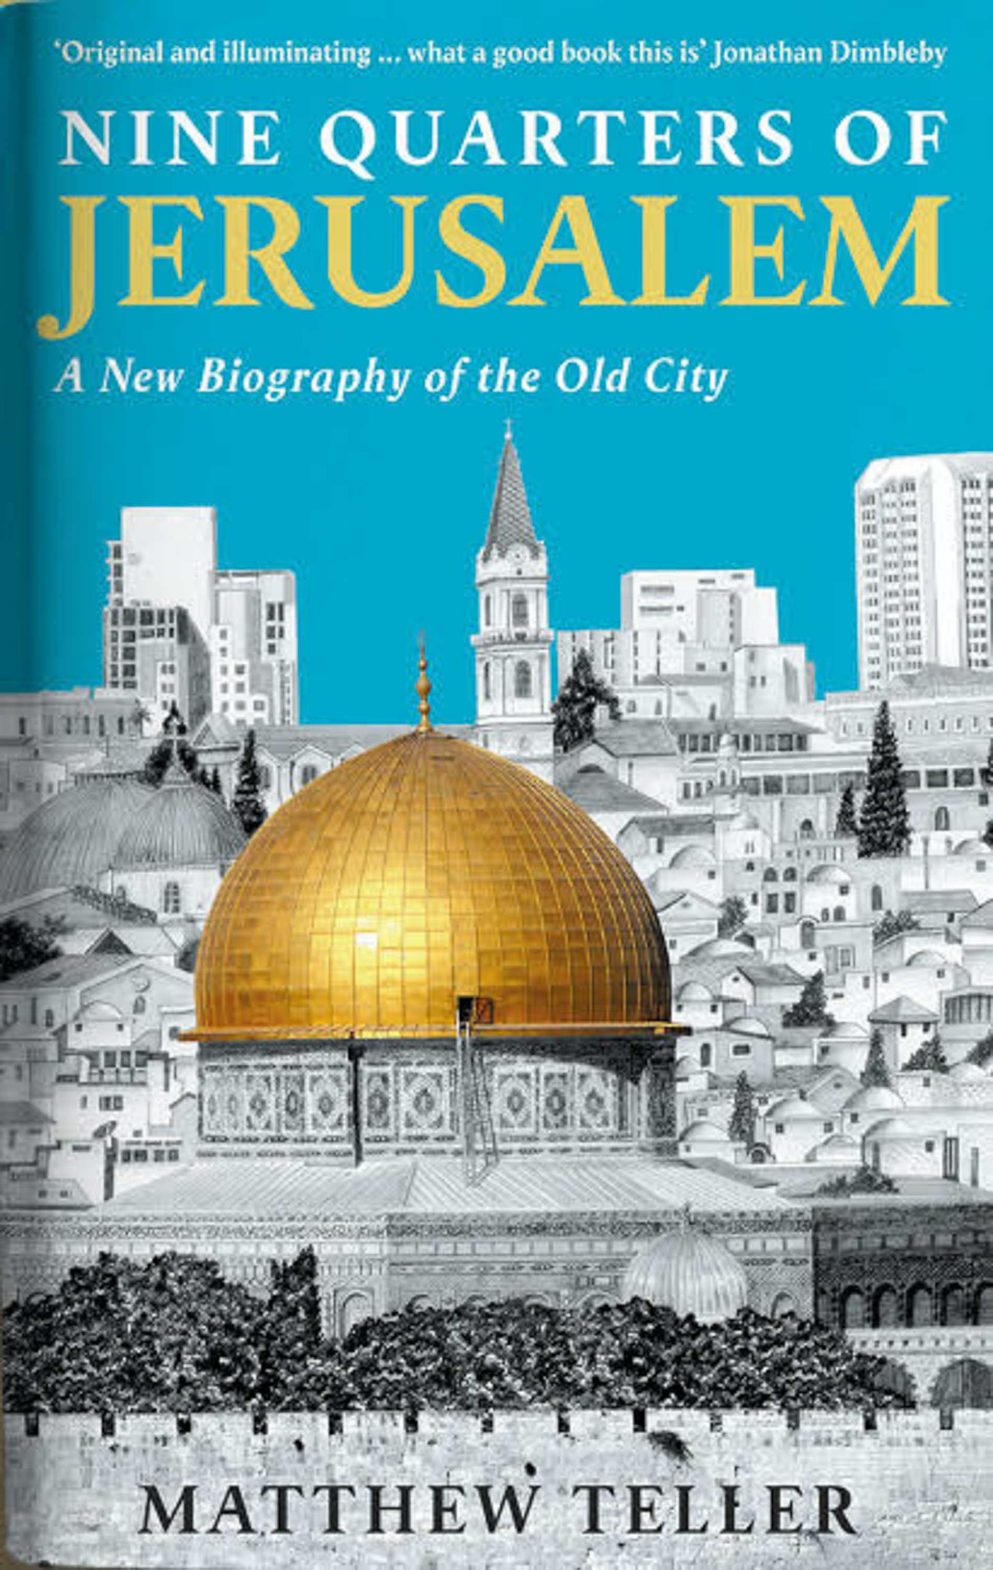 The book cover for Nine quarters of Jerusalem.